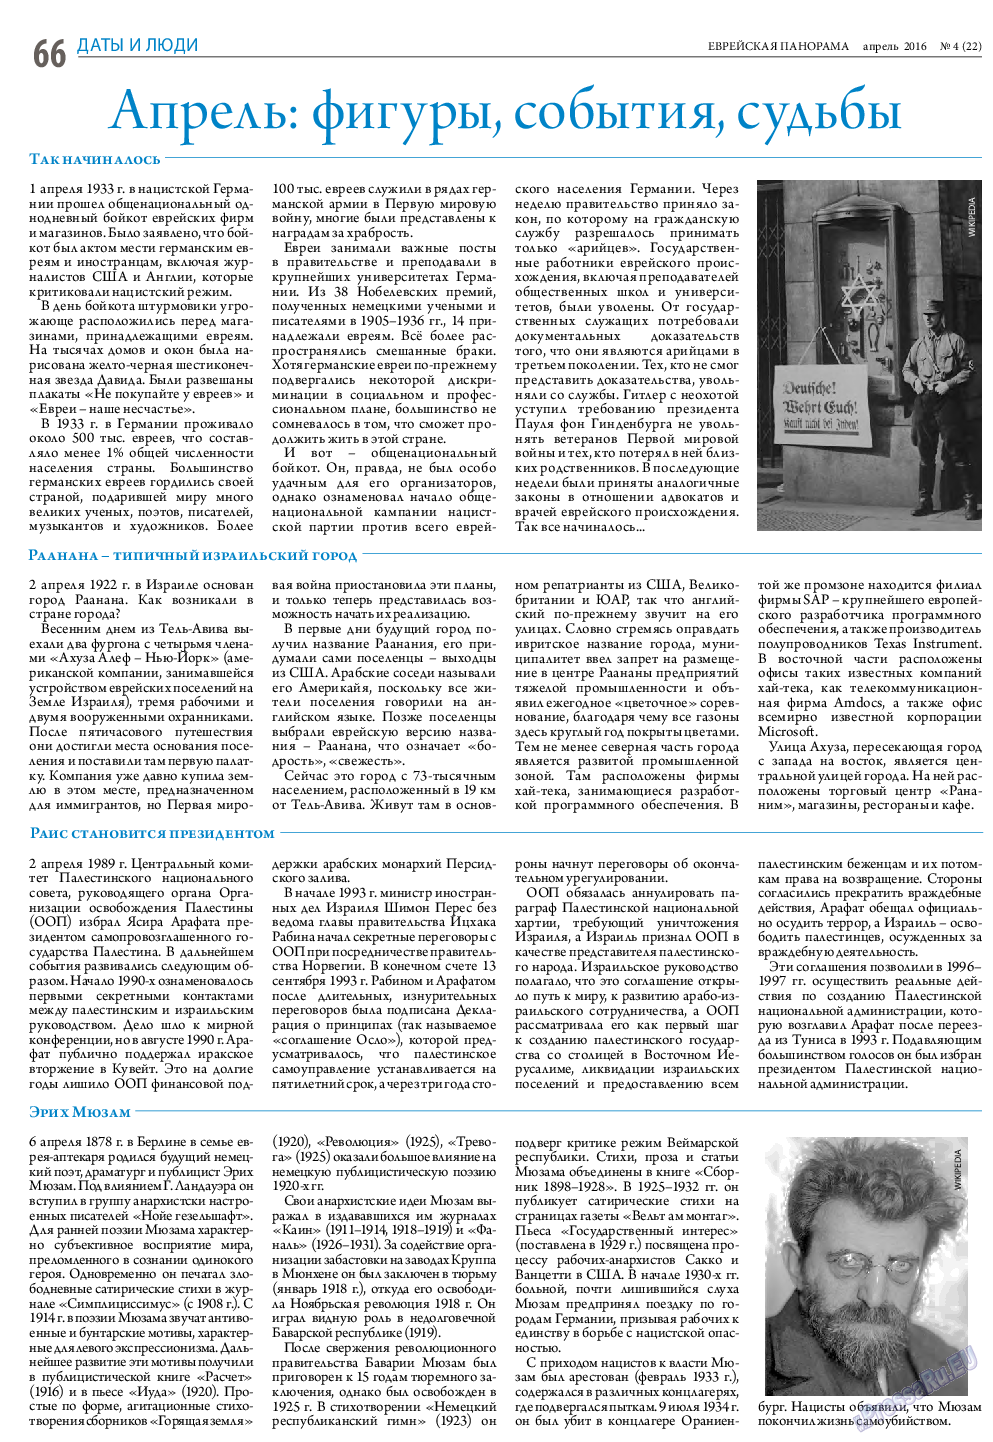 Еврейская панорама, газета. 2016 №4 стр.66